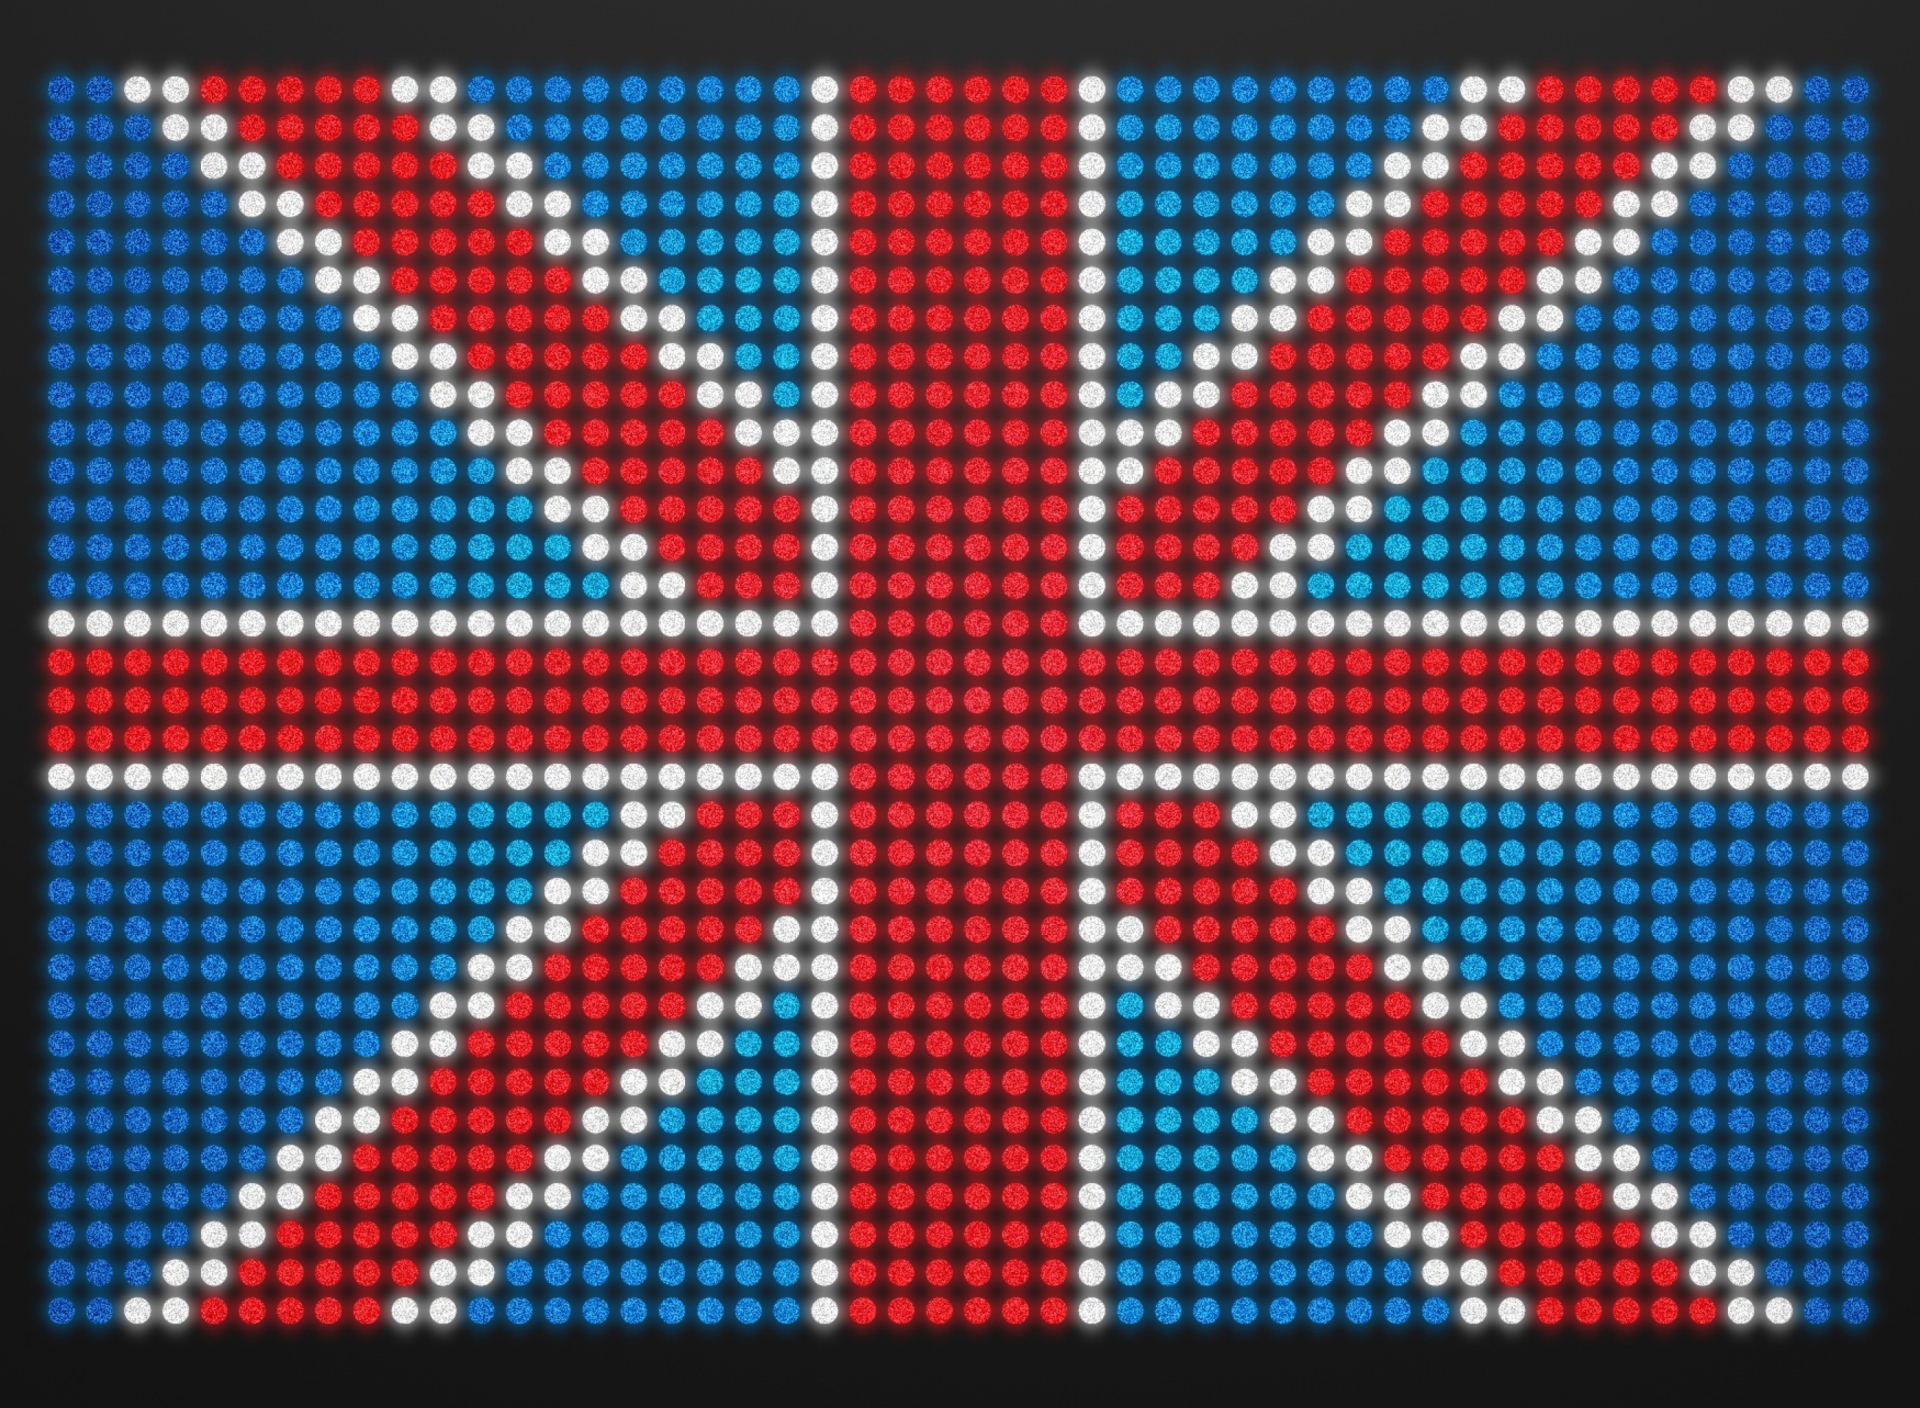 British Flag wallpaper 1920x1408